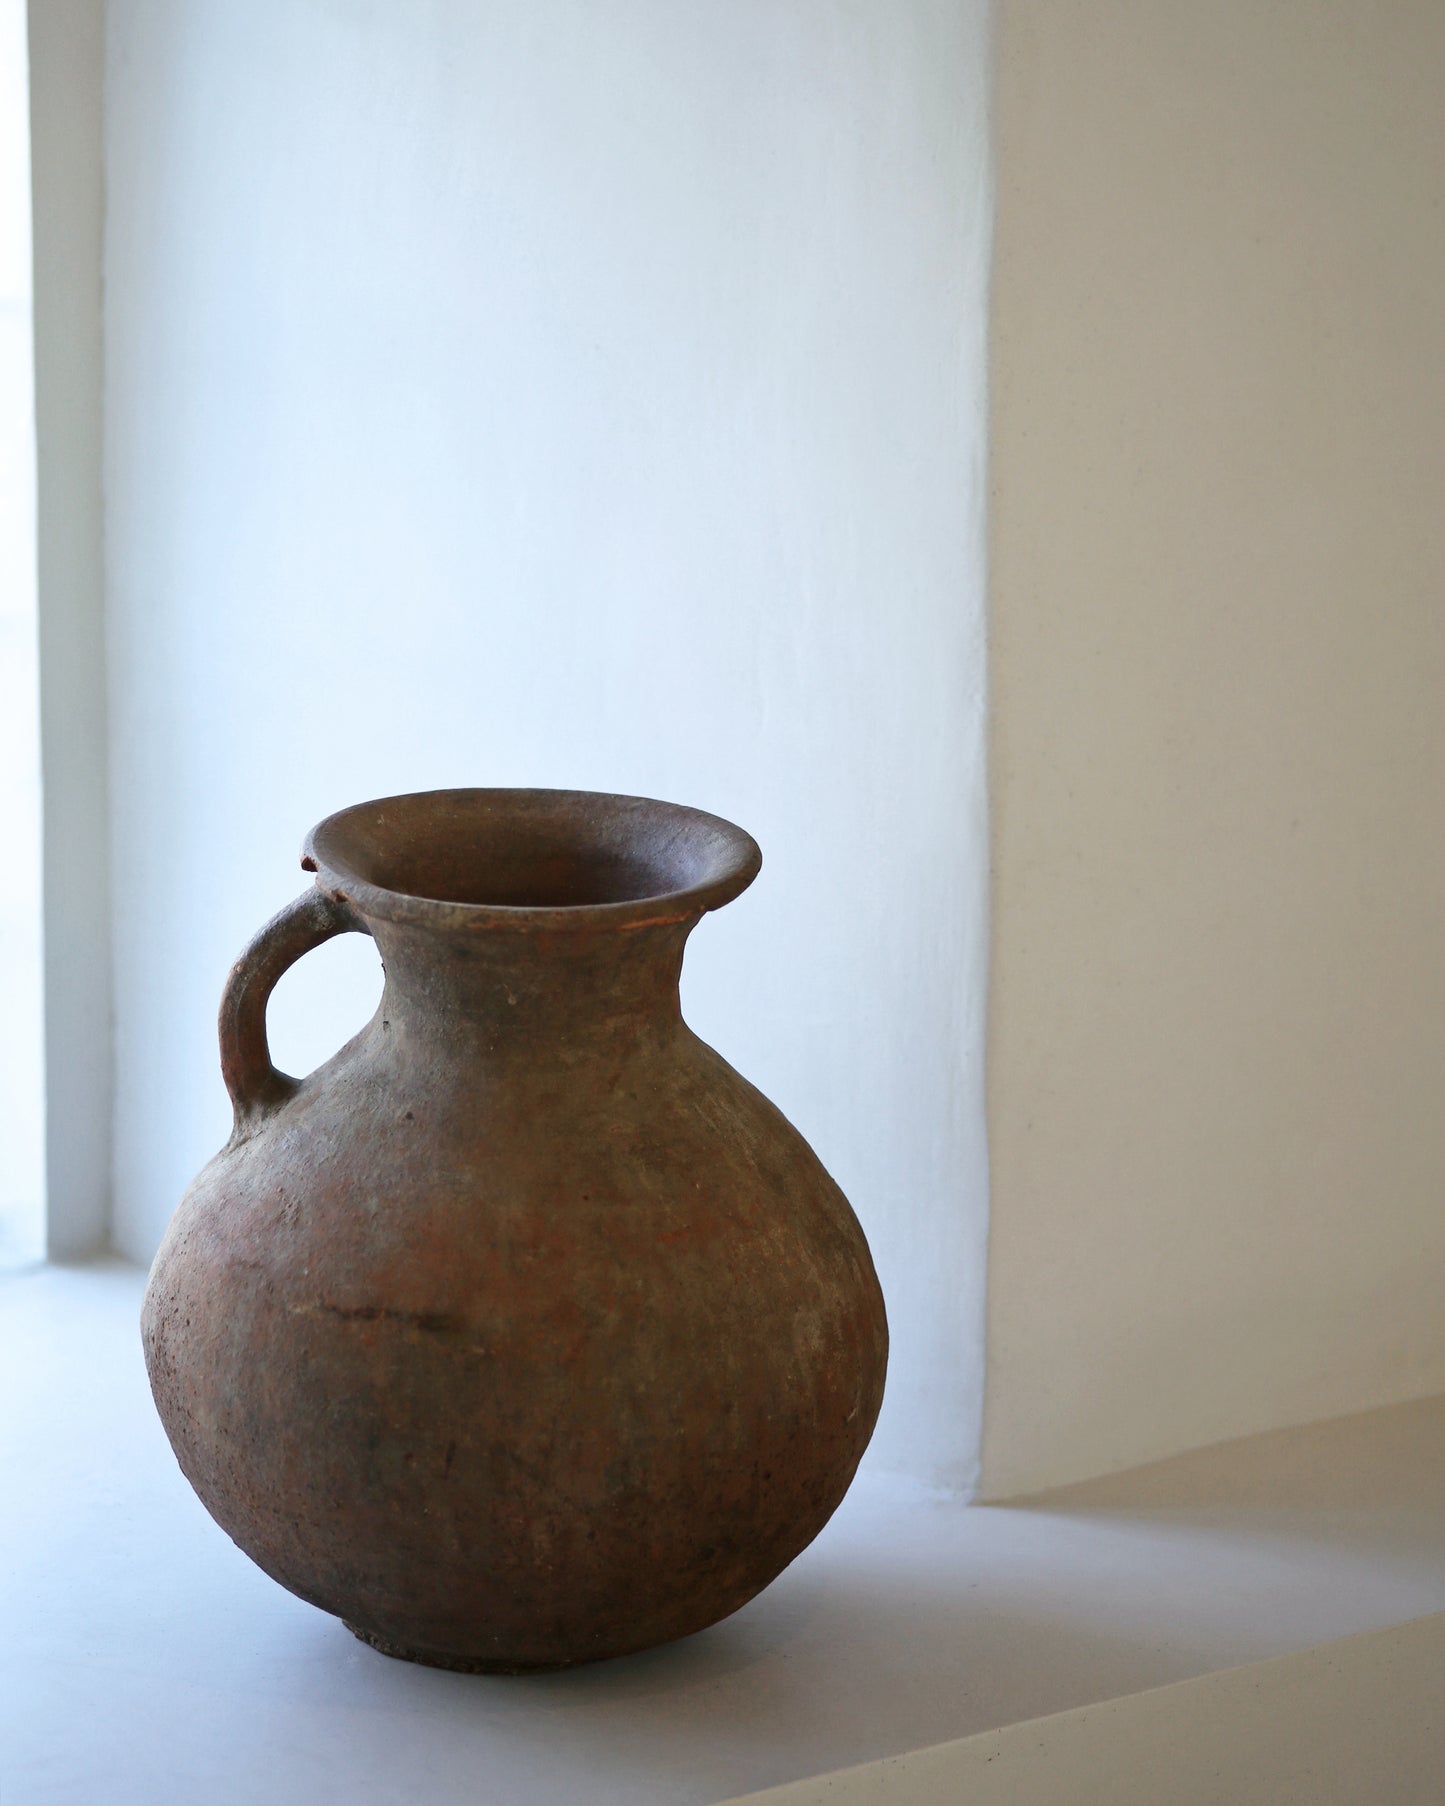 flared rim of antique water jug originating from Turkey